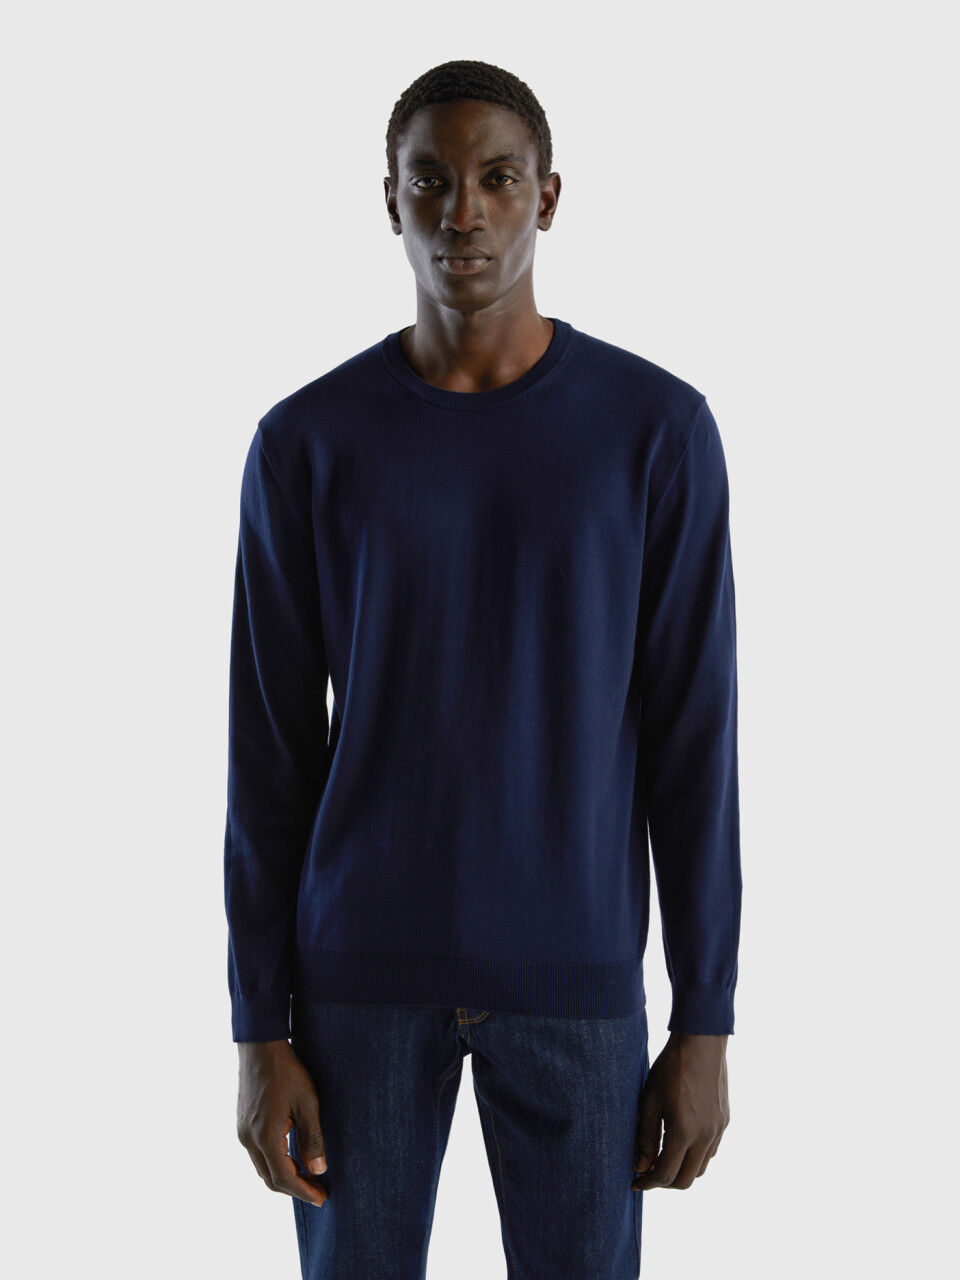 Crew neck sweater in 100% cotton